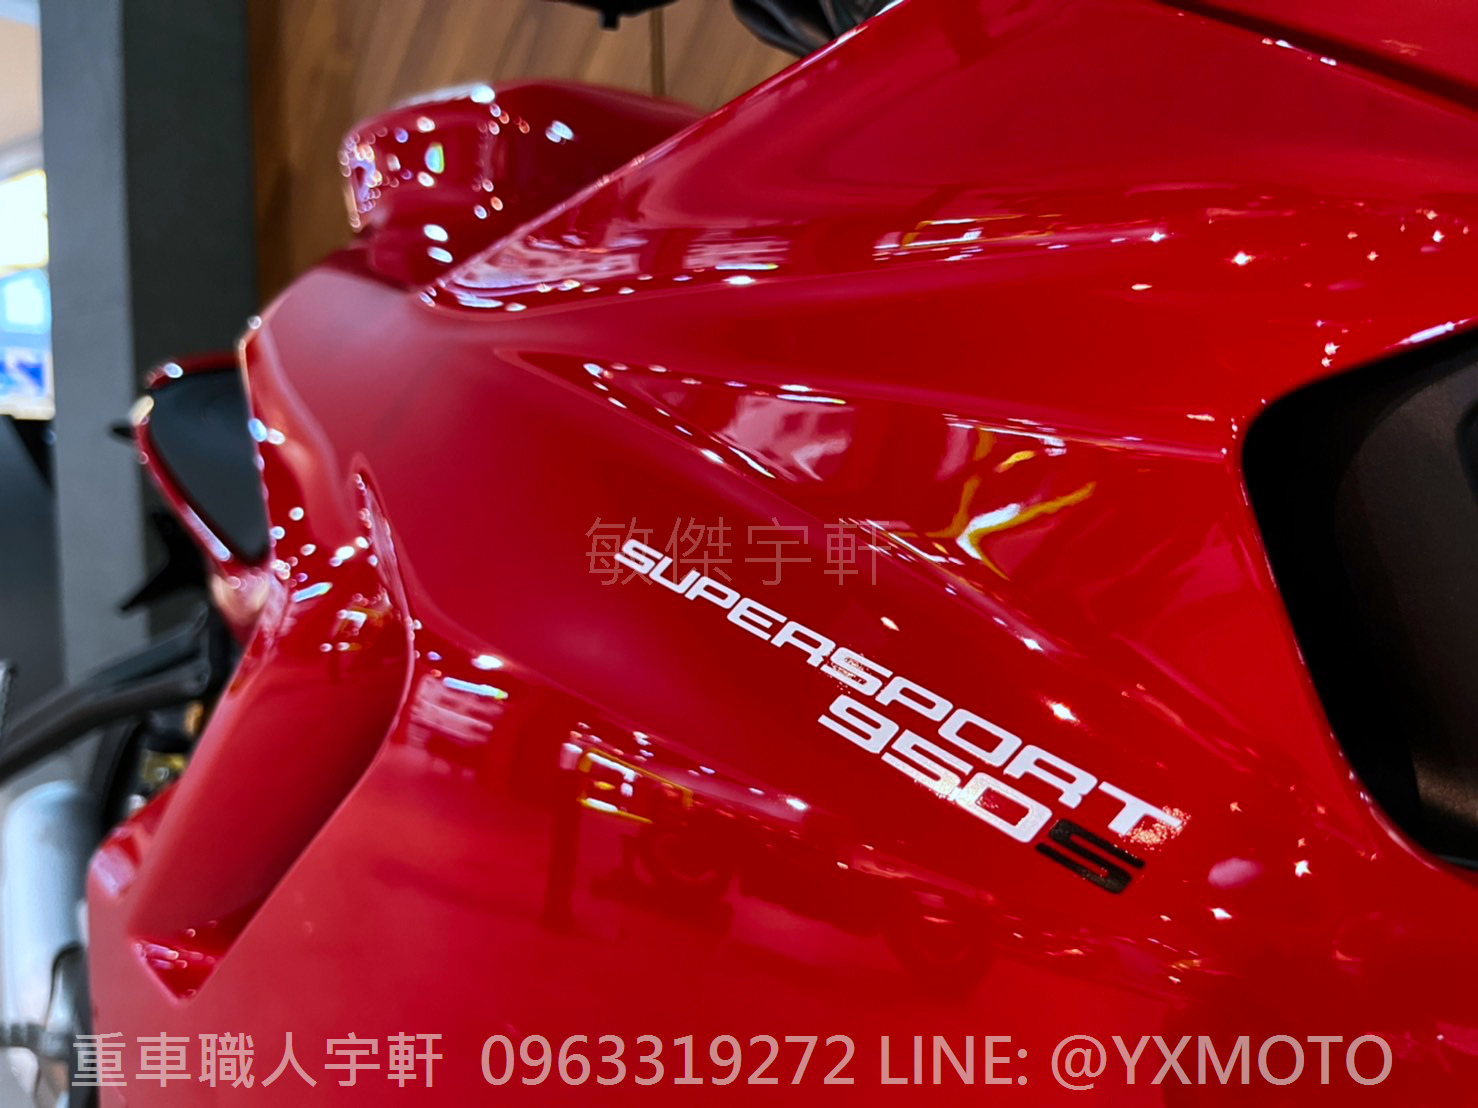 DUCATI SuperSport S新車出售中 【敏傑宇軒】杜卡迪 DUCATI SUPERSPORT S 紅色 總代理公司車 | 重車銷售職人-宇軒 (敏傑)